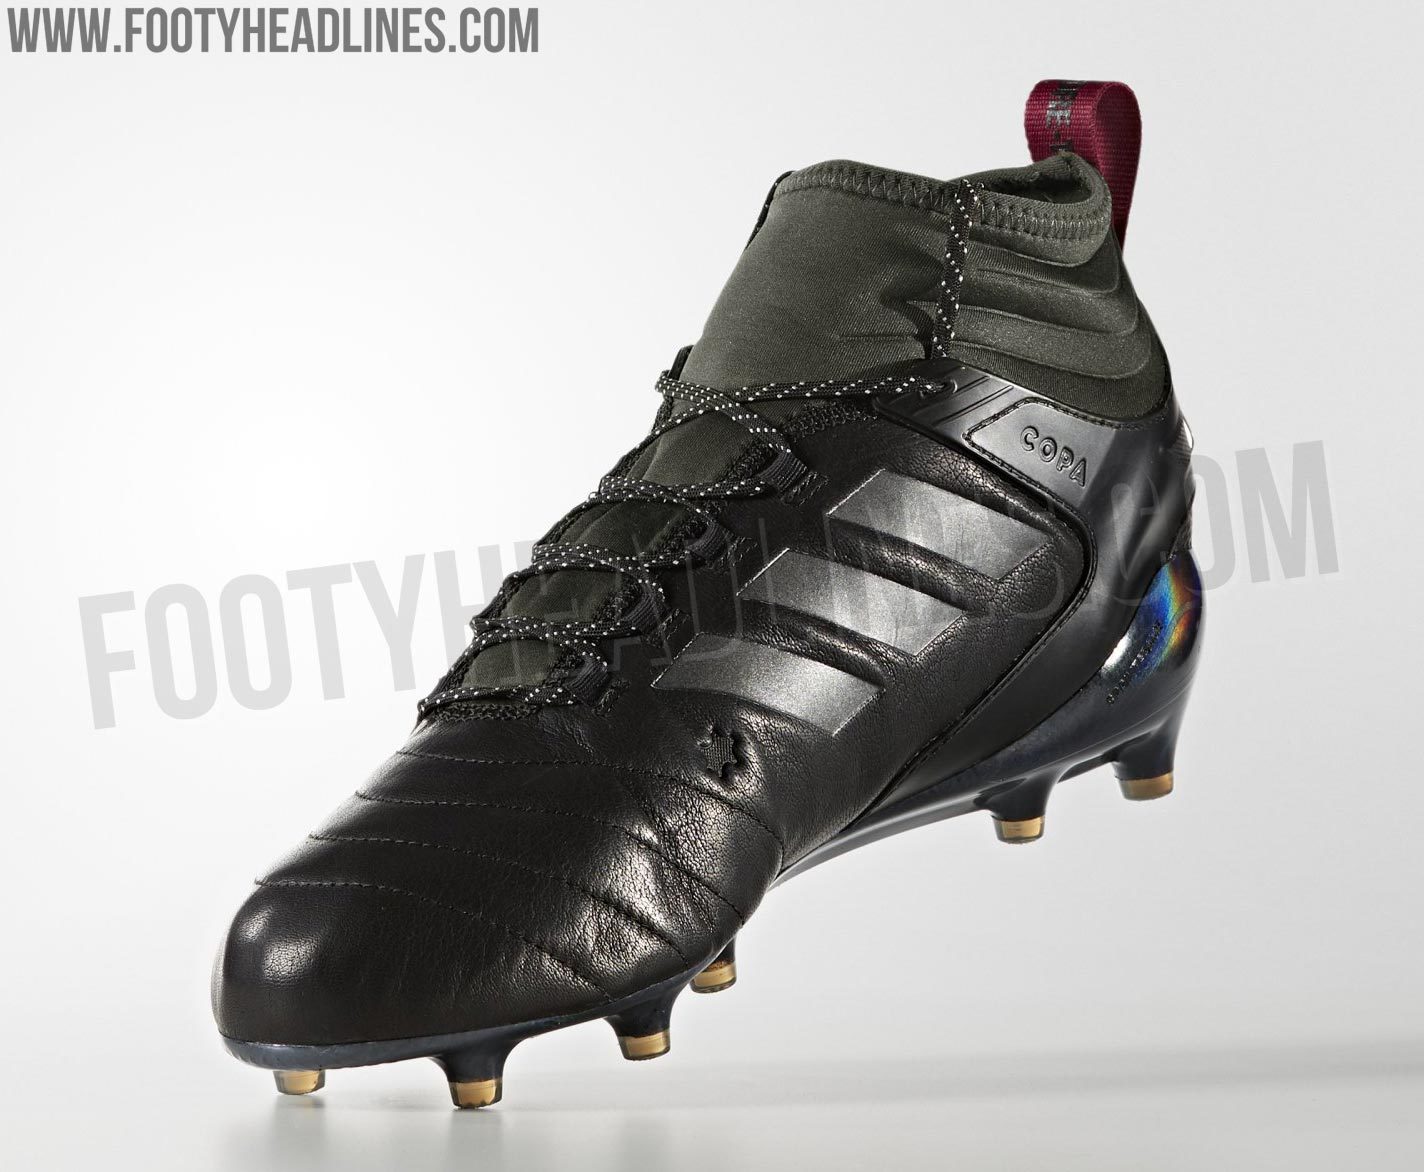 adidas-copa-17-mid-gore-tex-football-boots-6.jpg